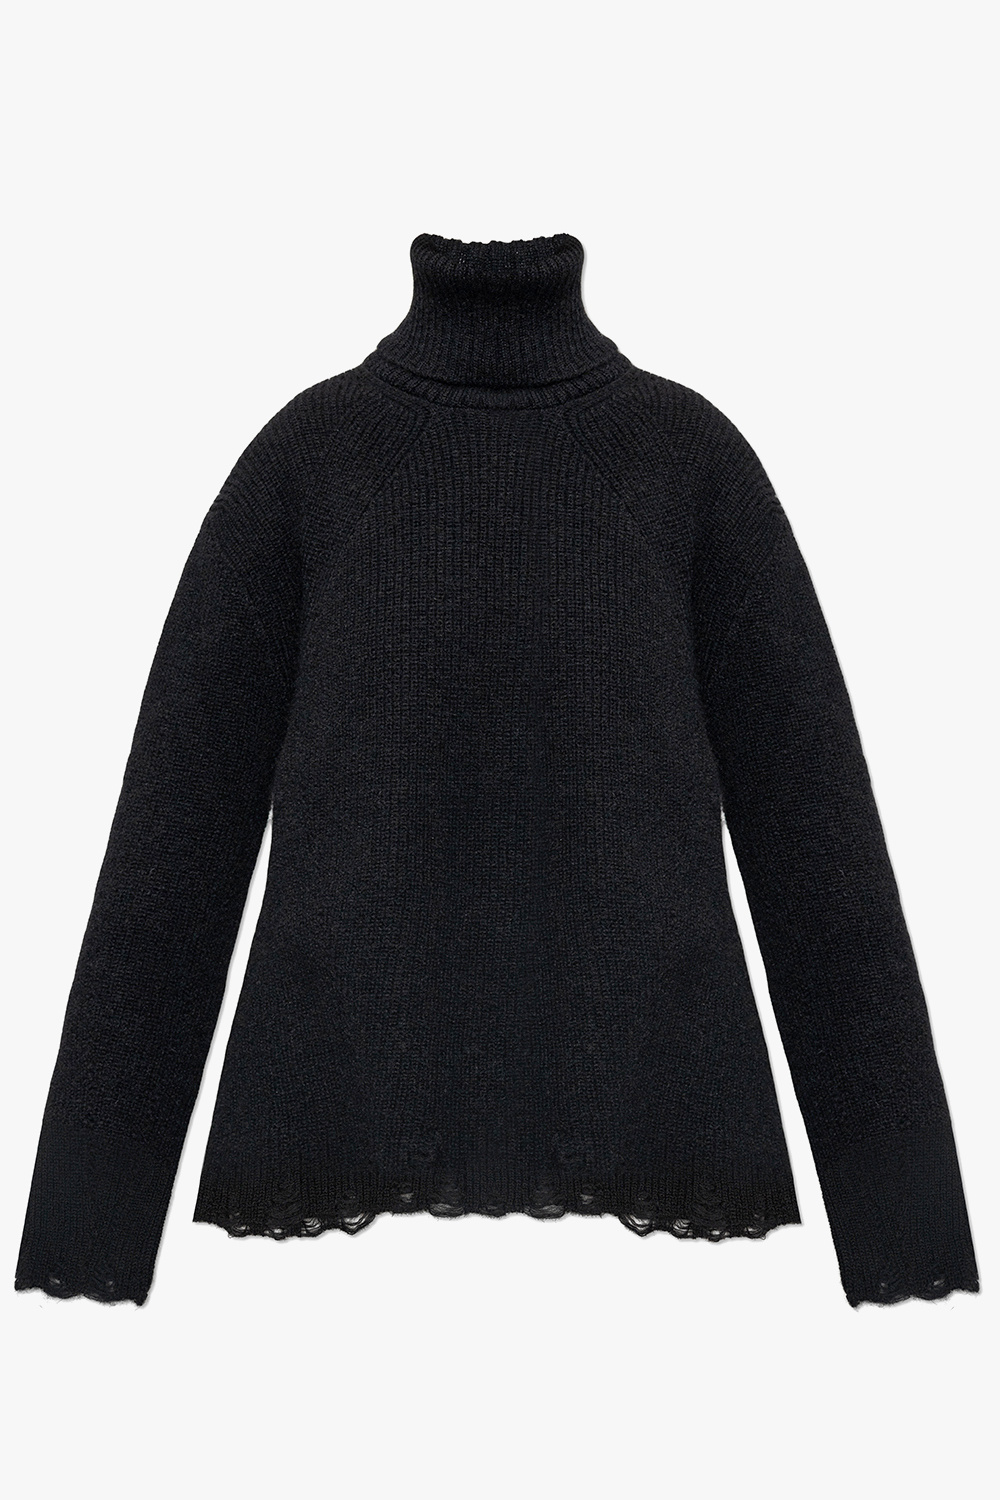 Junya Watanabe Comme des Garçons Turtleneck sweater with vintage effect